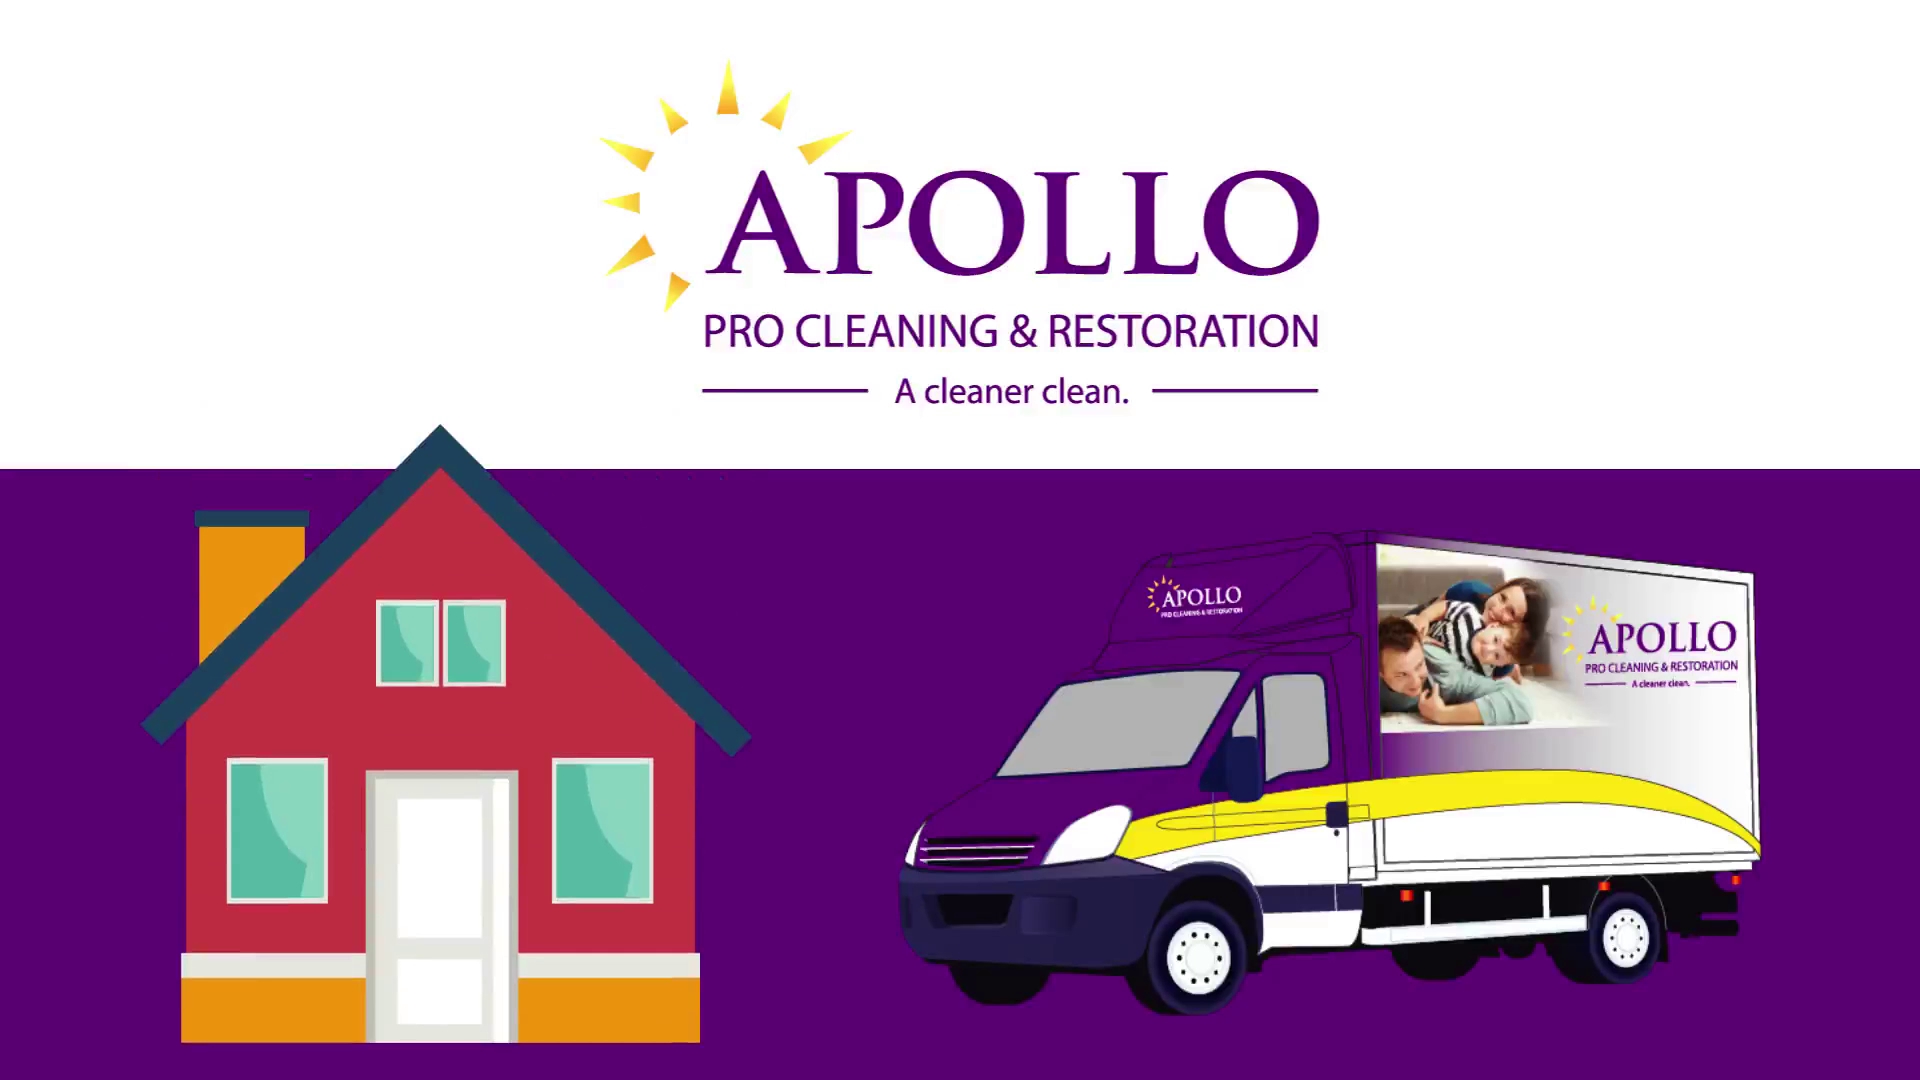 Apollo Pro Cleaning & Restoration 1626 Cadiz Rd, Wintersville Ohio 43953